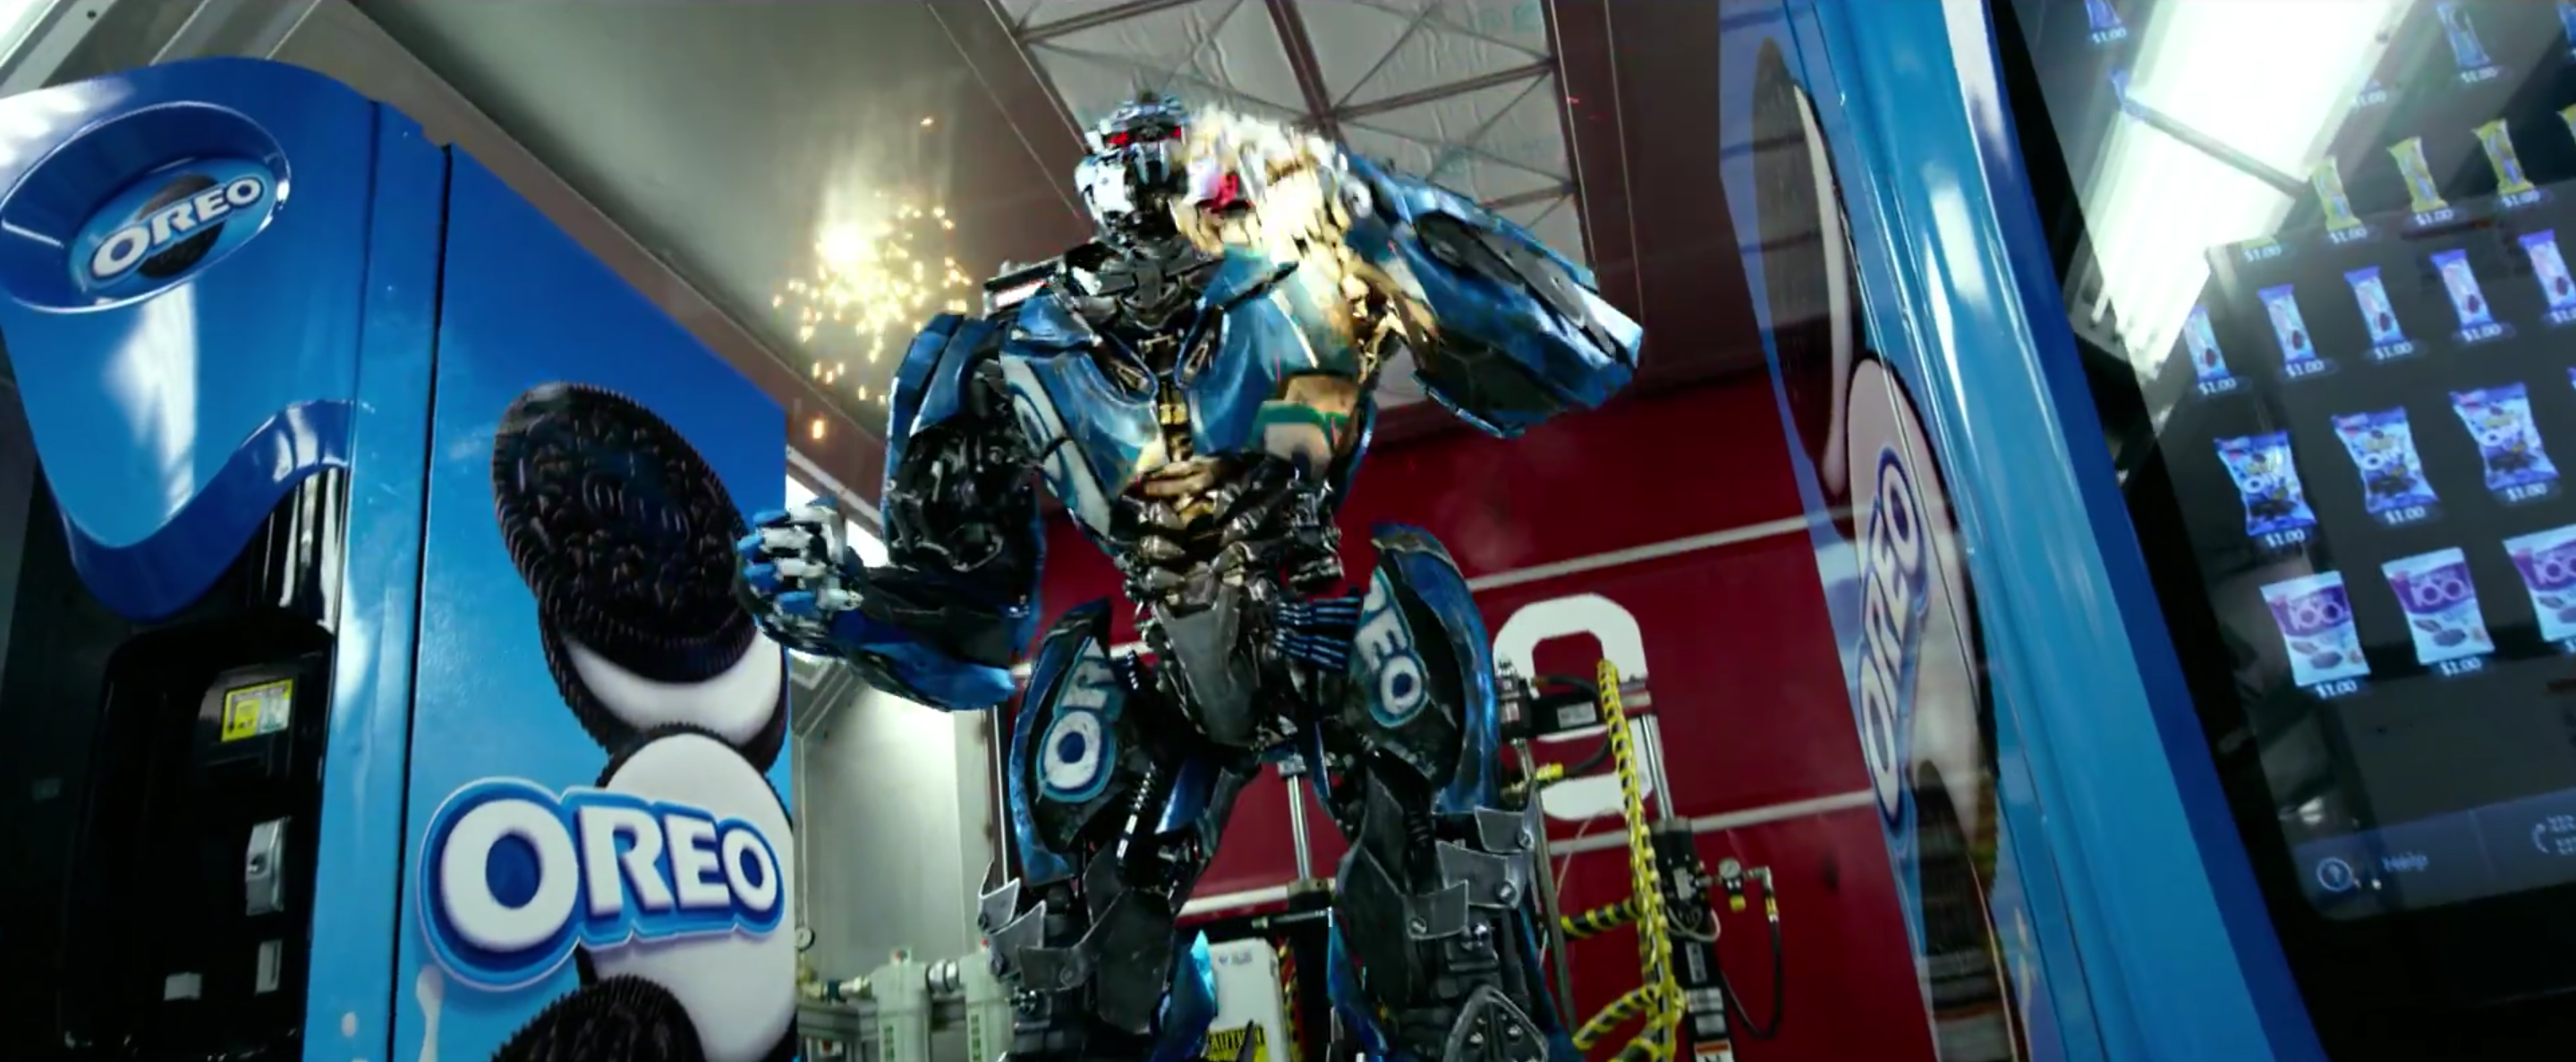 En Oreo-tranformer i "Transformers: Extinction". Blinkar ni, missar ni den. Foto: Paramount Pictures.